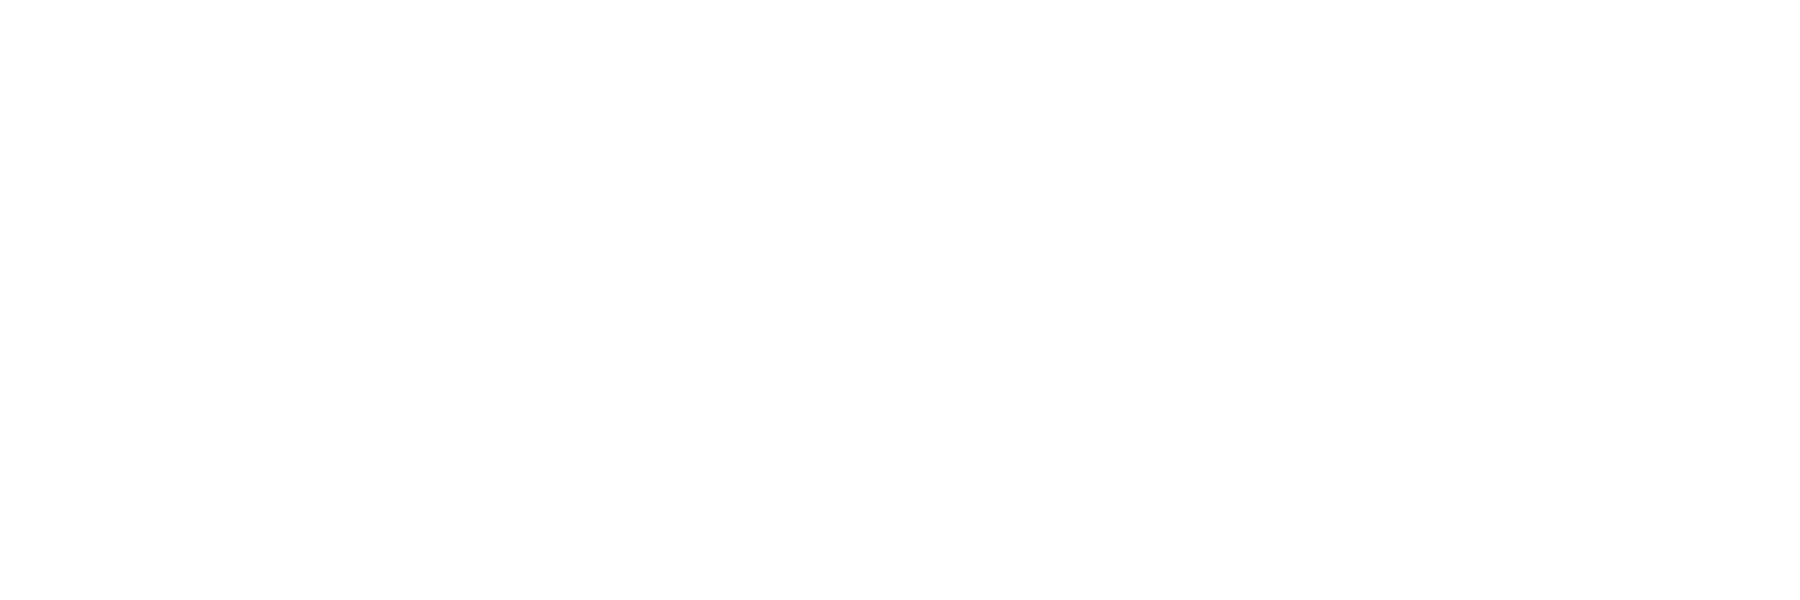 Prestige Financial Advisors